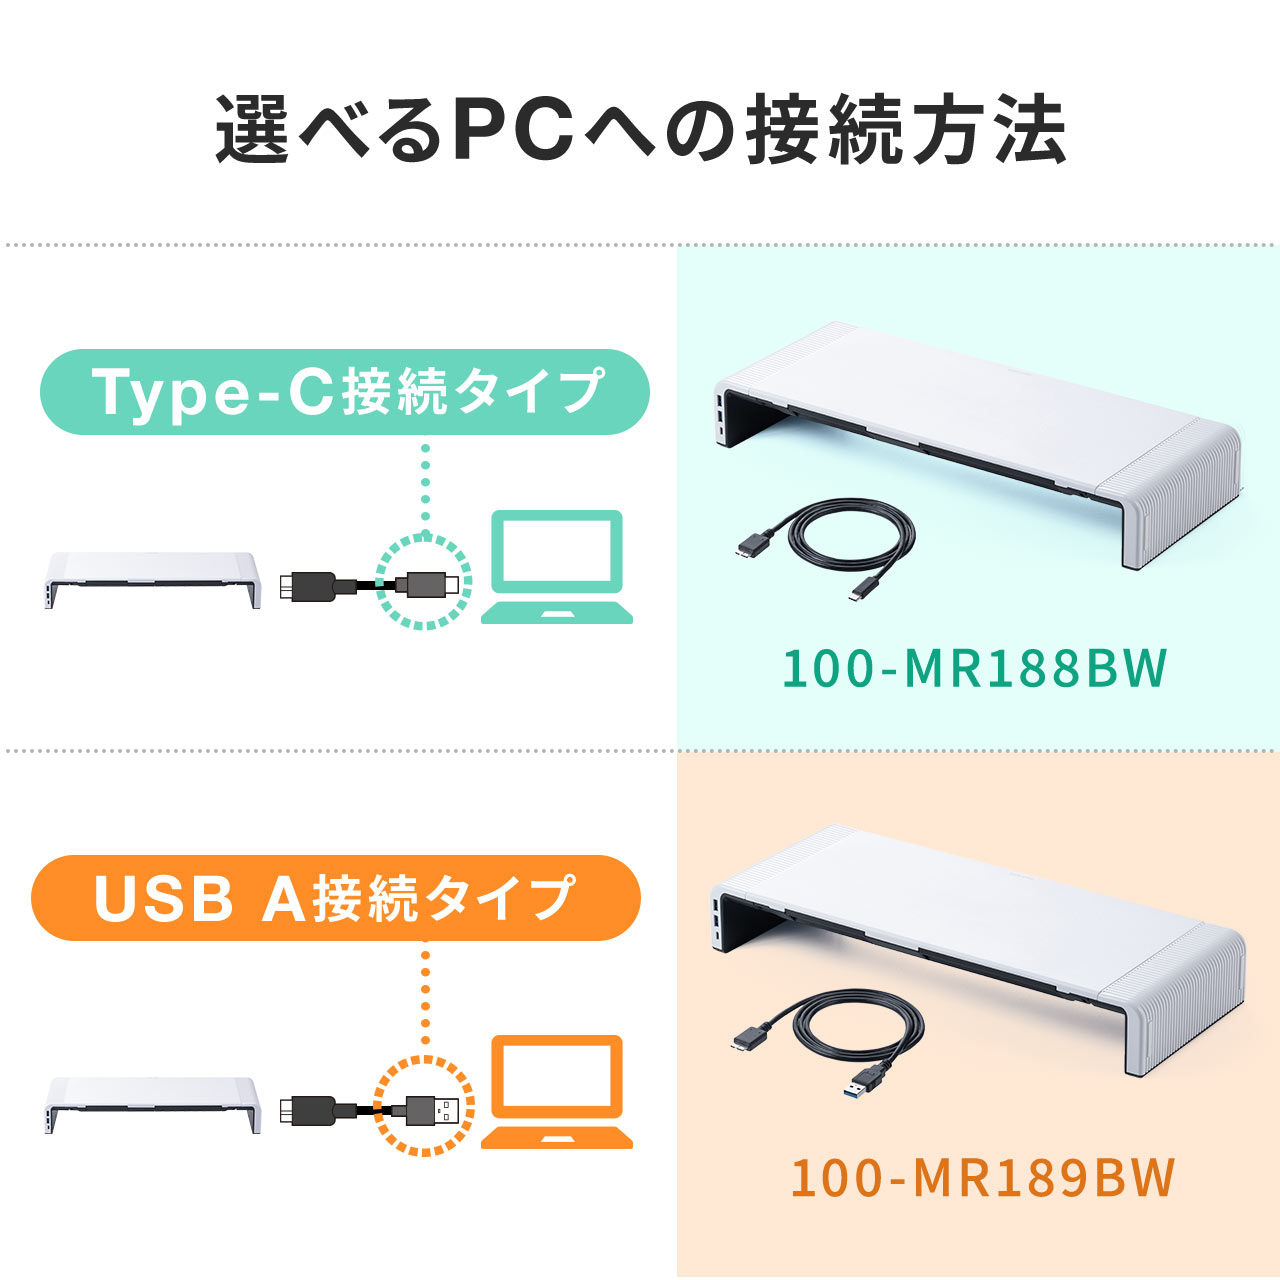 j^[  3iK 42cm/47cm/52cm o USBnu Type-C Type-A Type-Cڑ ubN 101-MRLC210CHBK